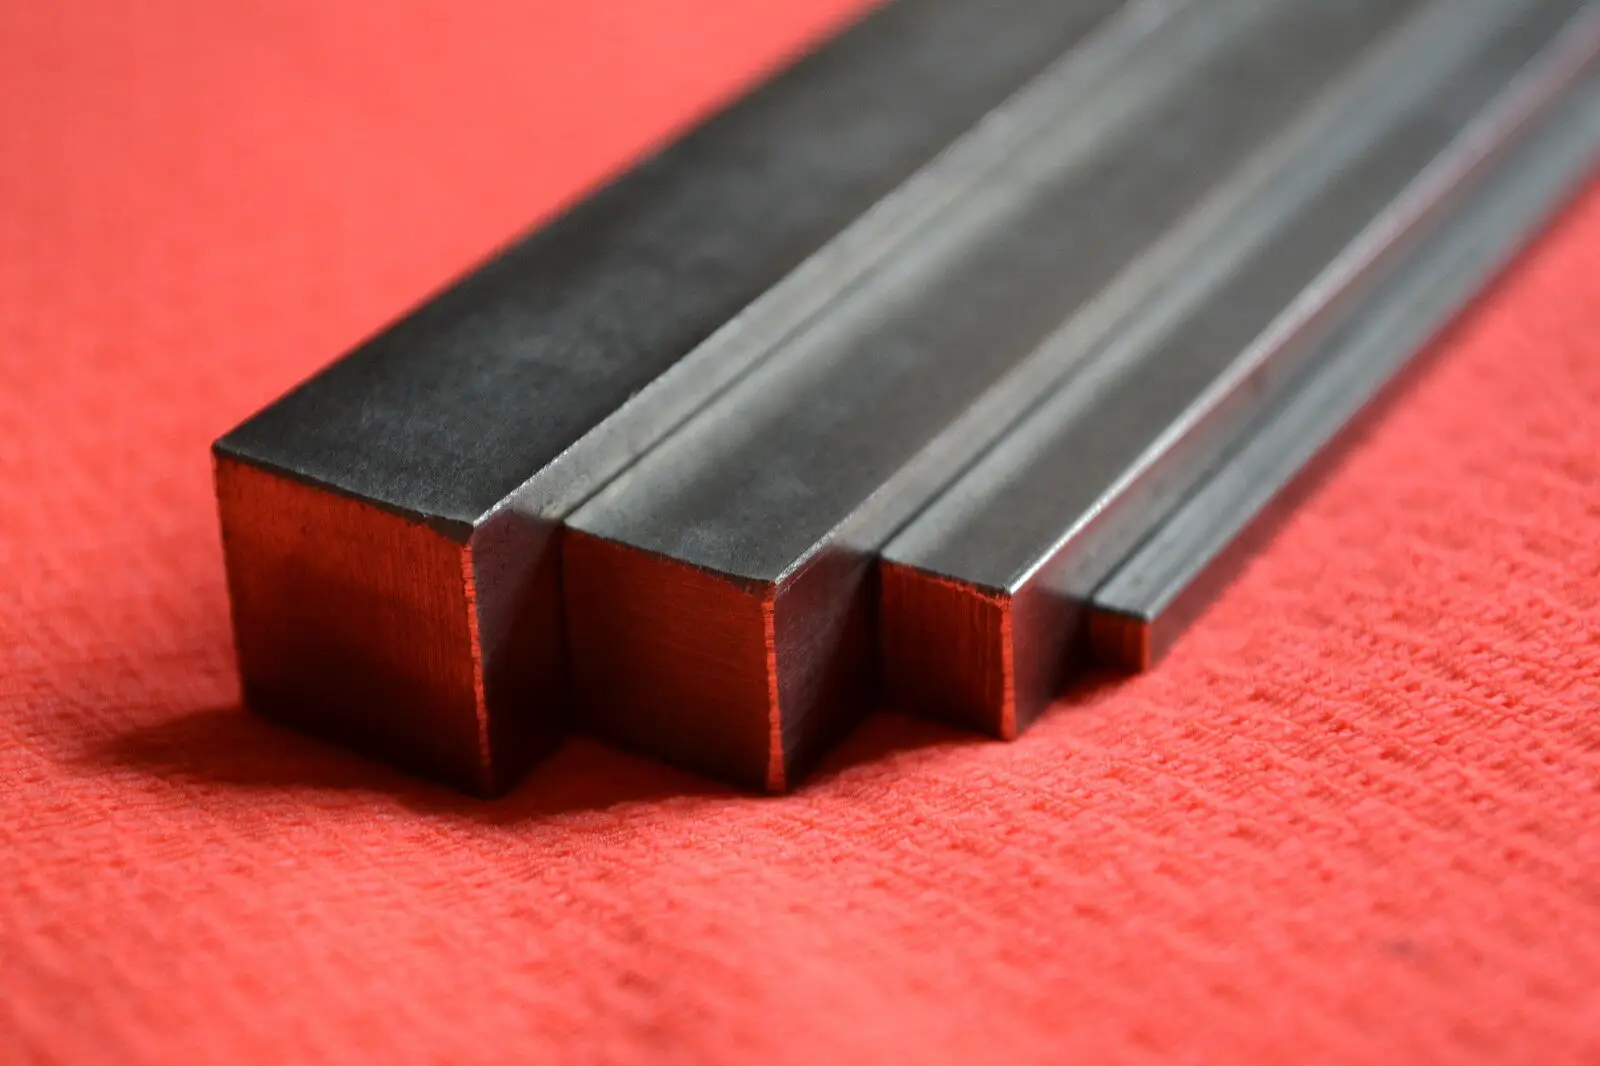 

4pcs 300mm 304 Stainless Steel Square Bar Rod MODEL MAKERS 5mm 6mm 7mm 8mm 10mm 12mm 15mm 18mm Flat Shaft Stock Customize L